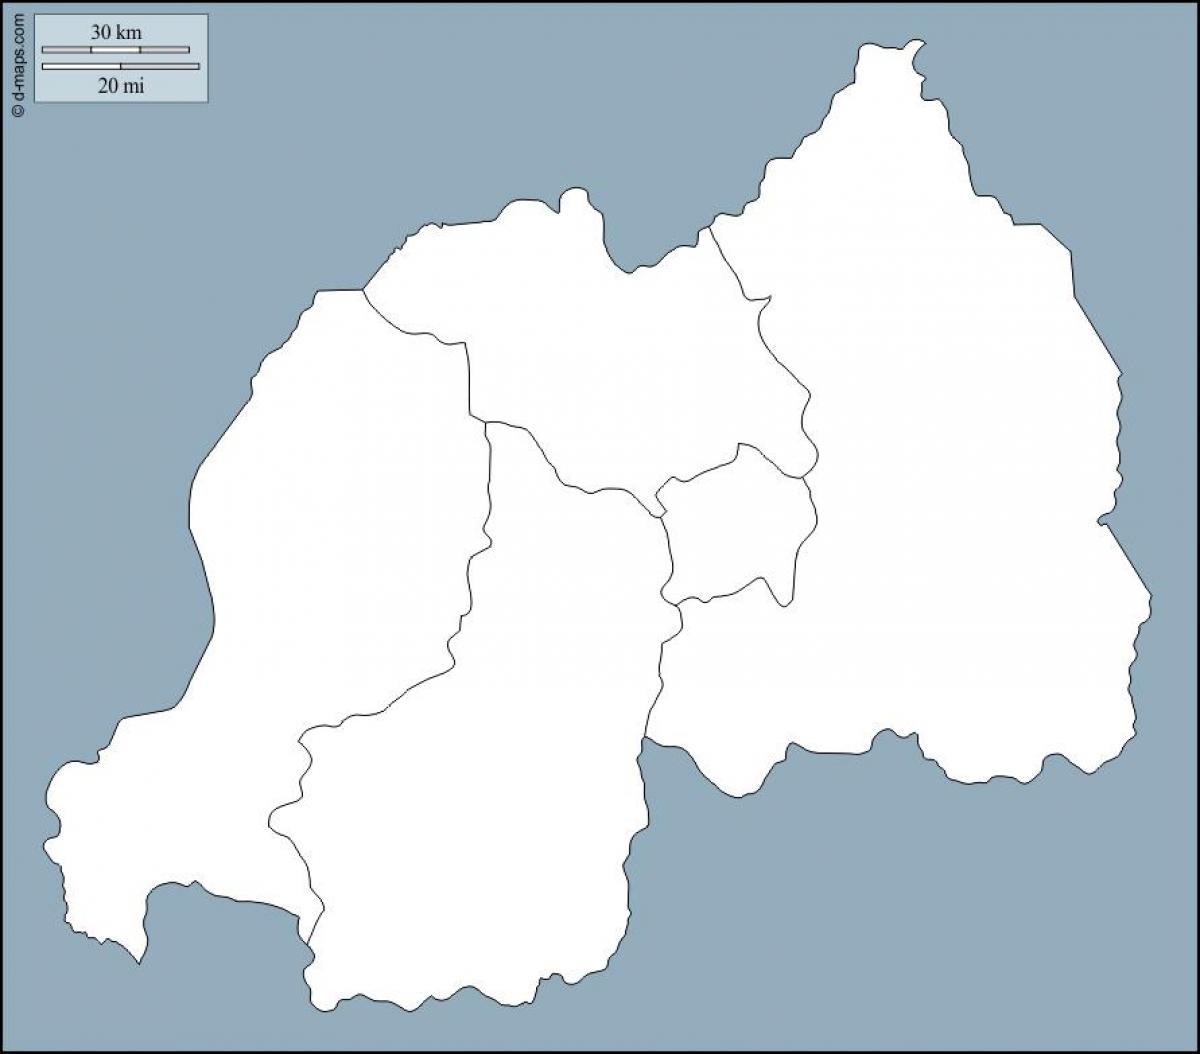 Rwanda mapu osnovy